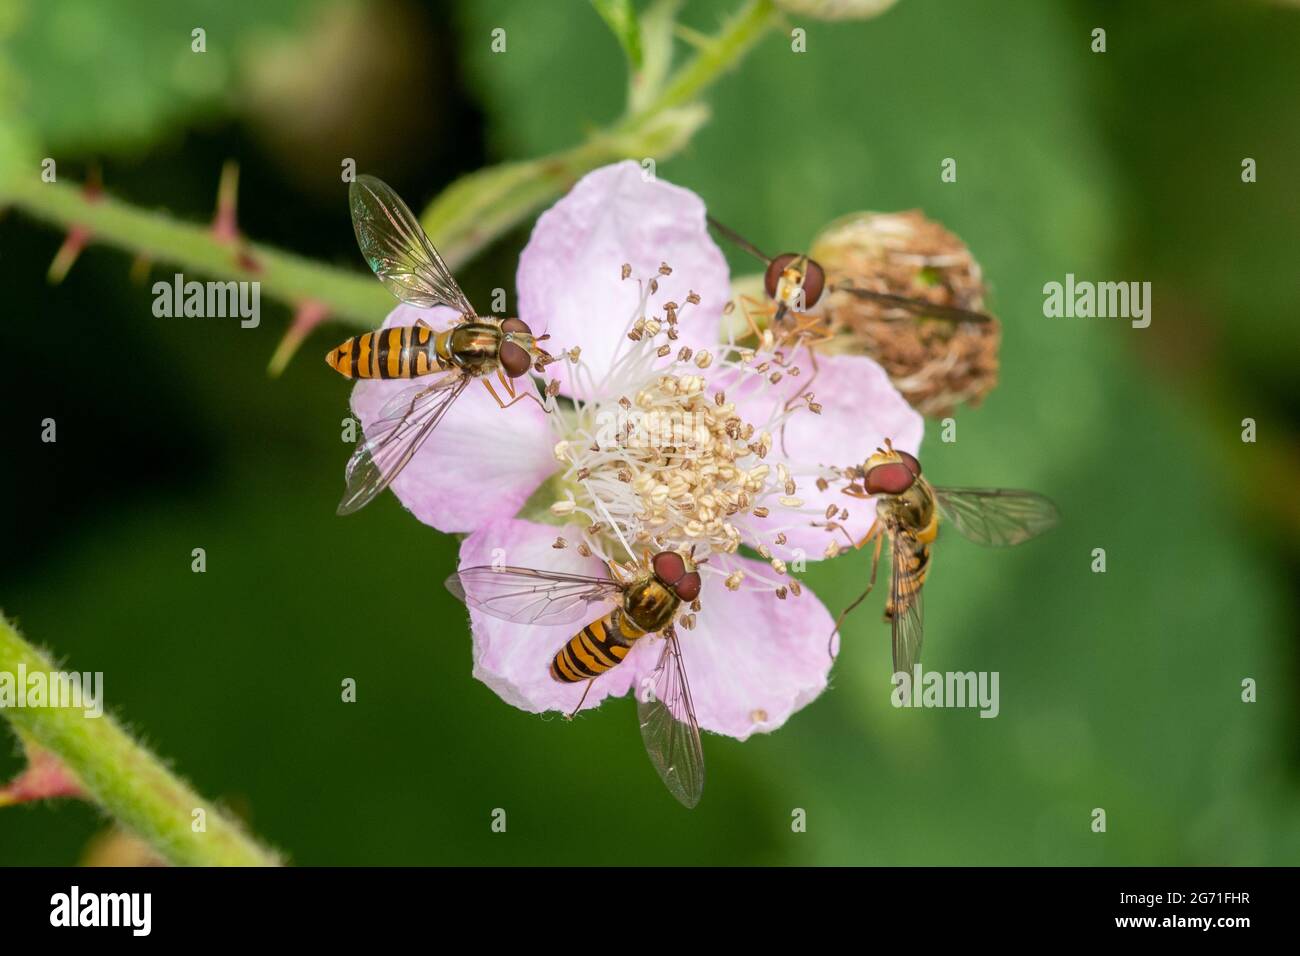 Four marmalade hoverflies (Episyrphus balteatus) feeding on nectar on a bramble flower, UK, during summer Stock Photo